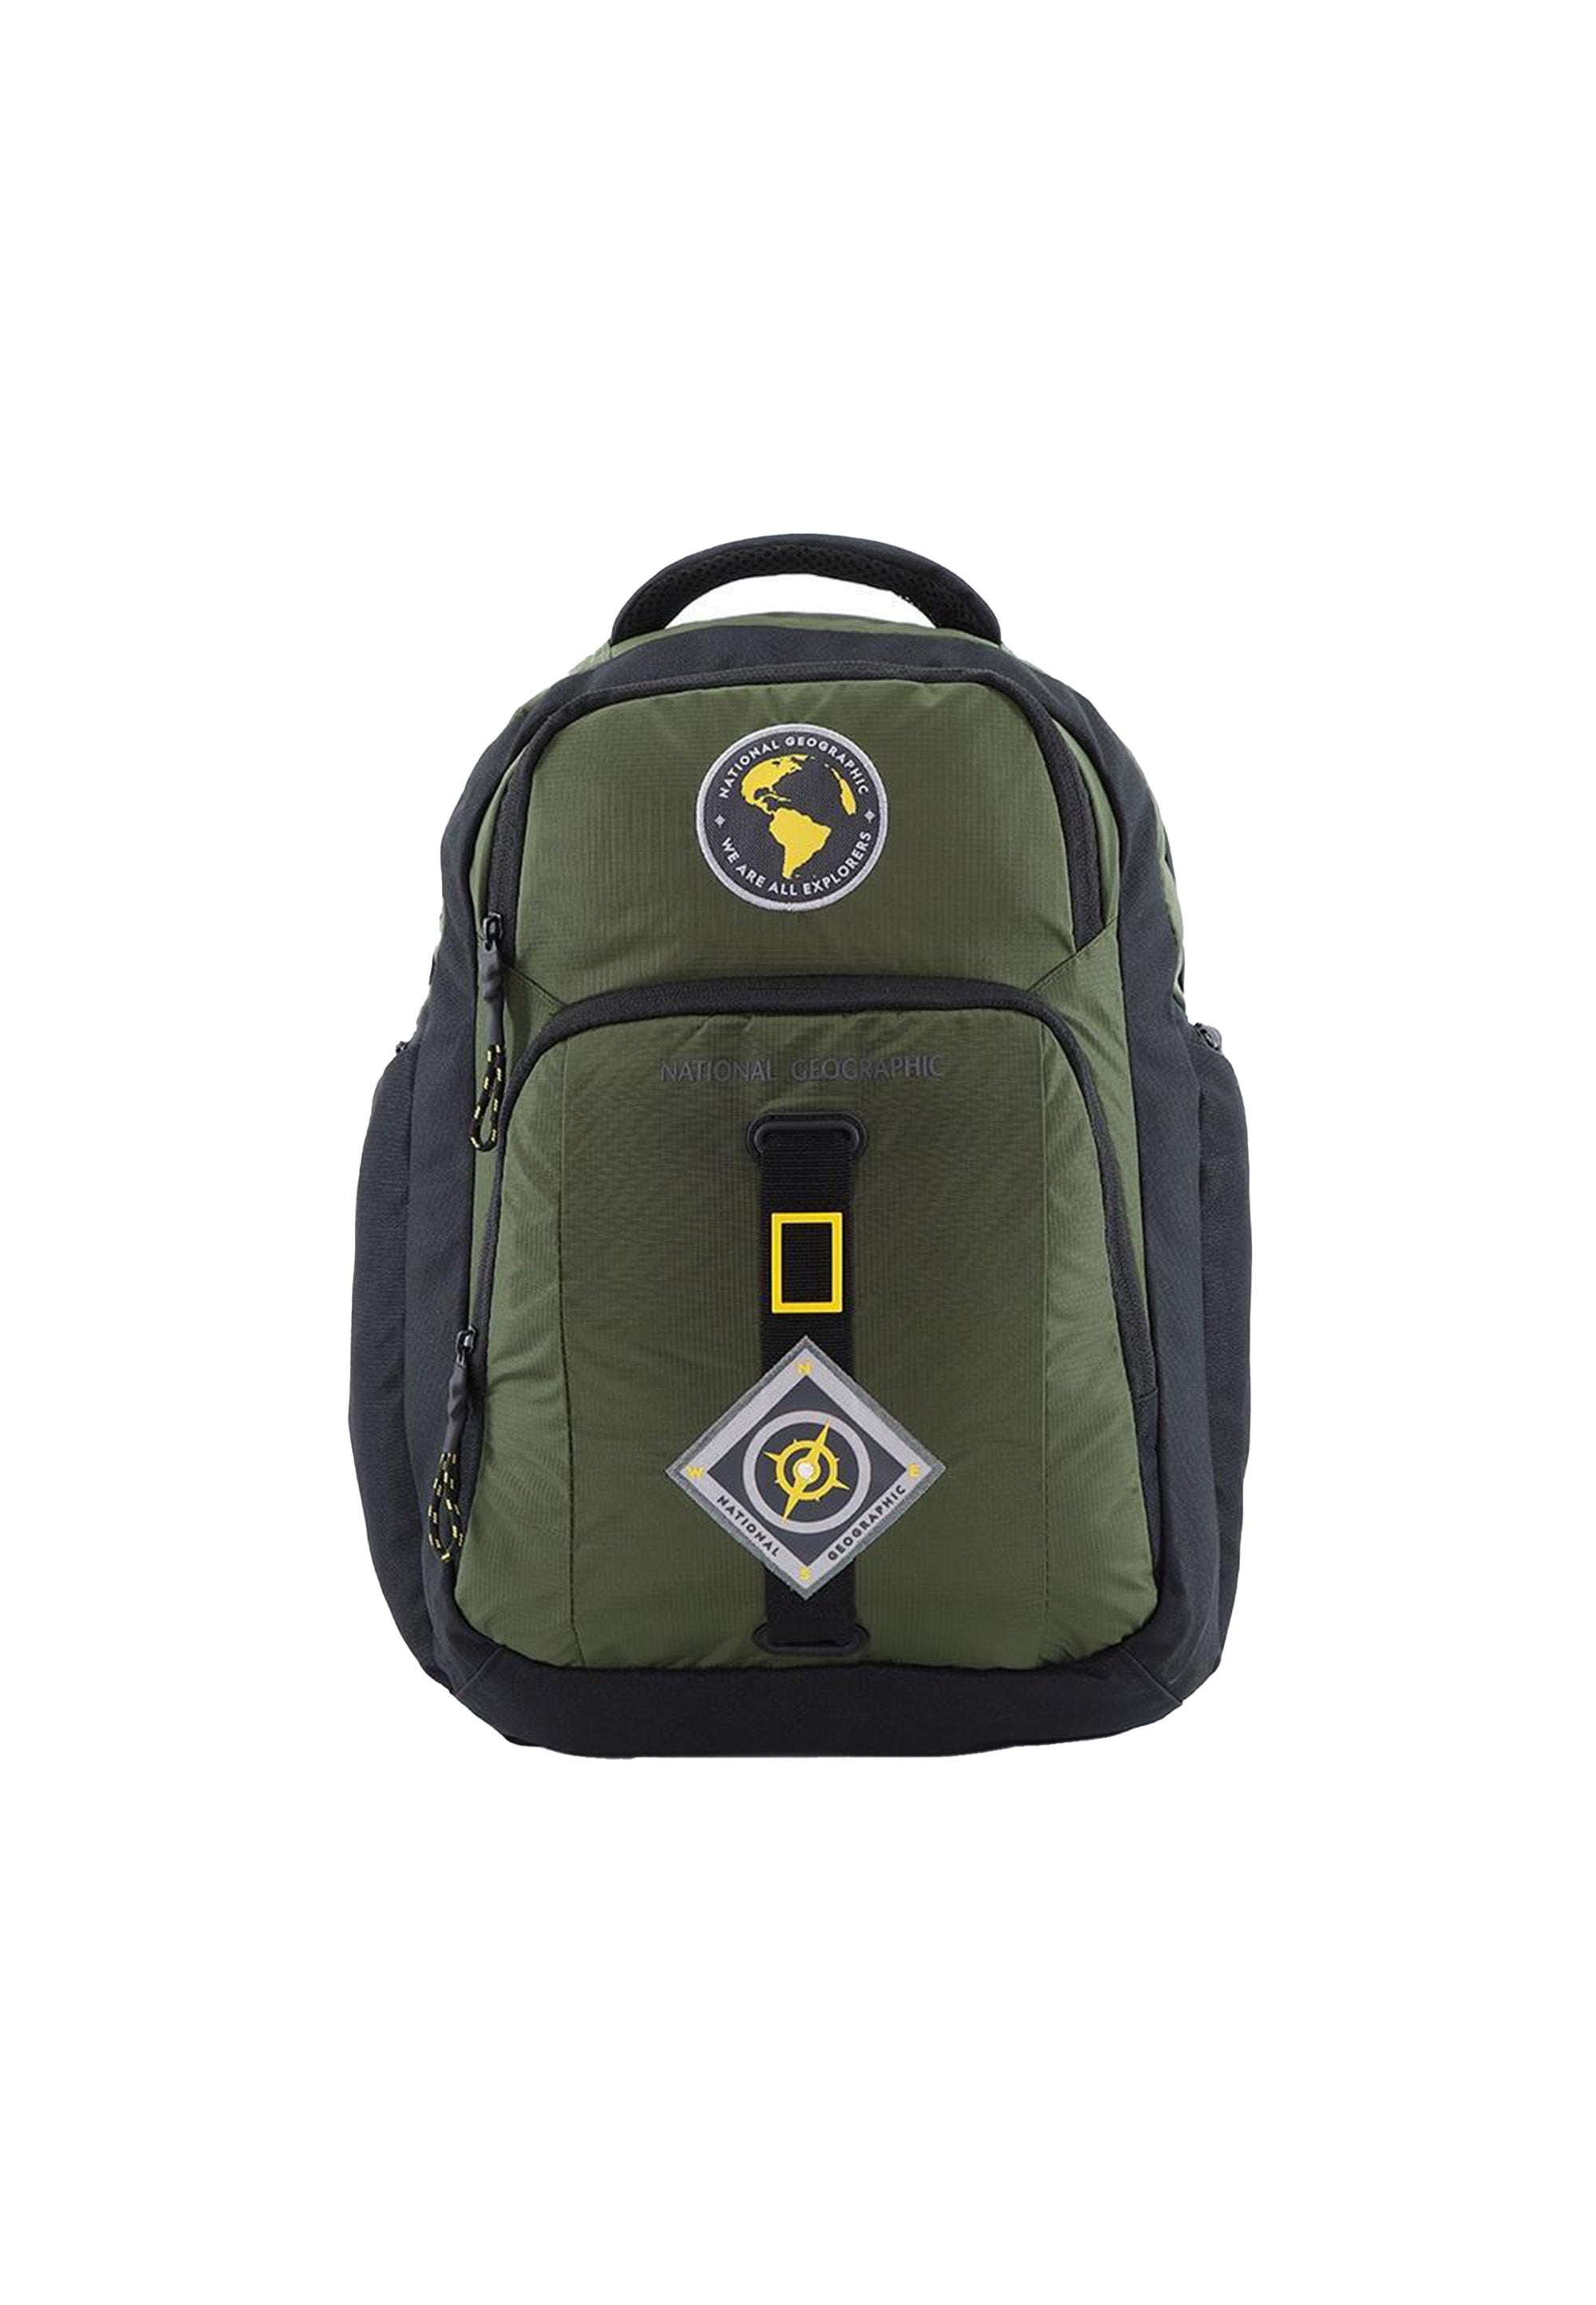 National Geographic - New Explorer Rucksack / Outdoor-Rucksack / Laptop-Rucksack - 25L - Khaki